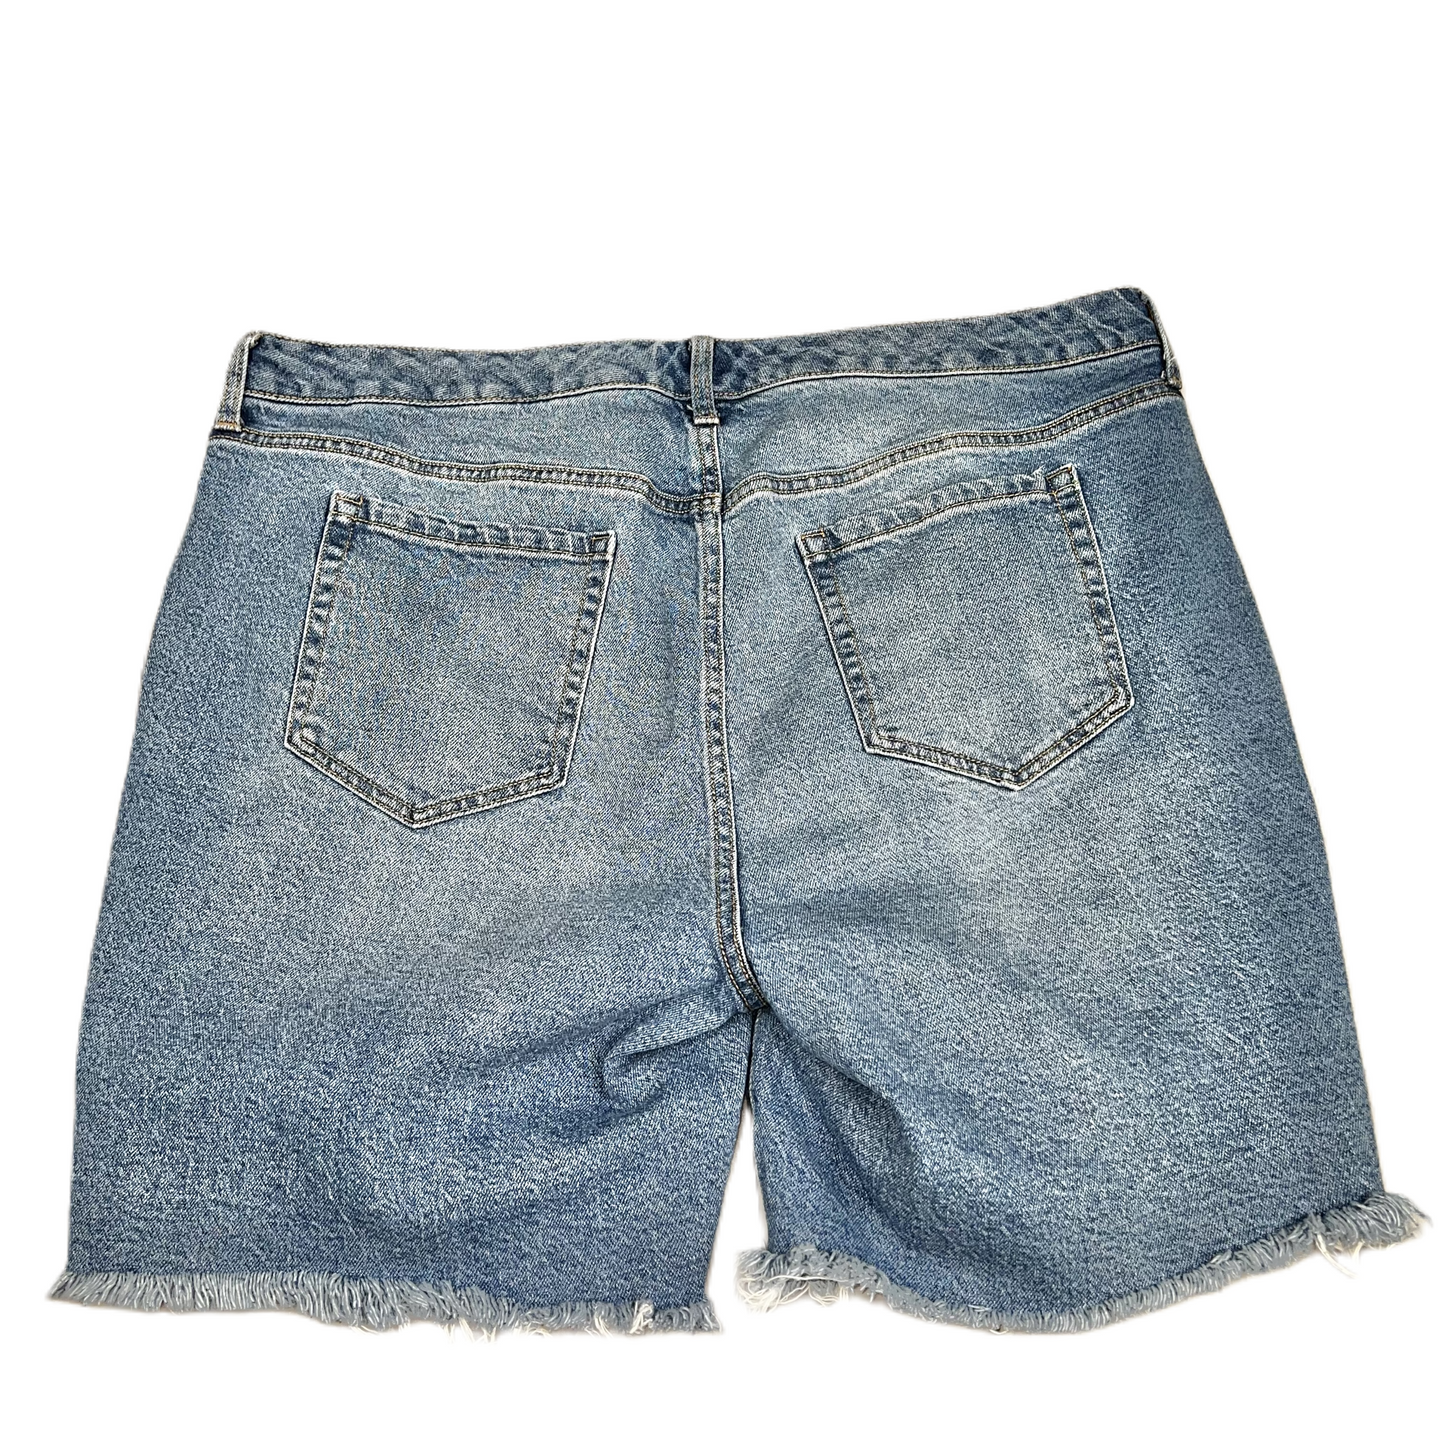 Blue Denim Shorts By Torrid, Size: 16